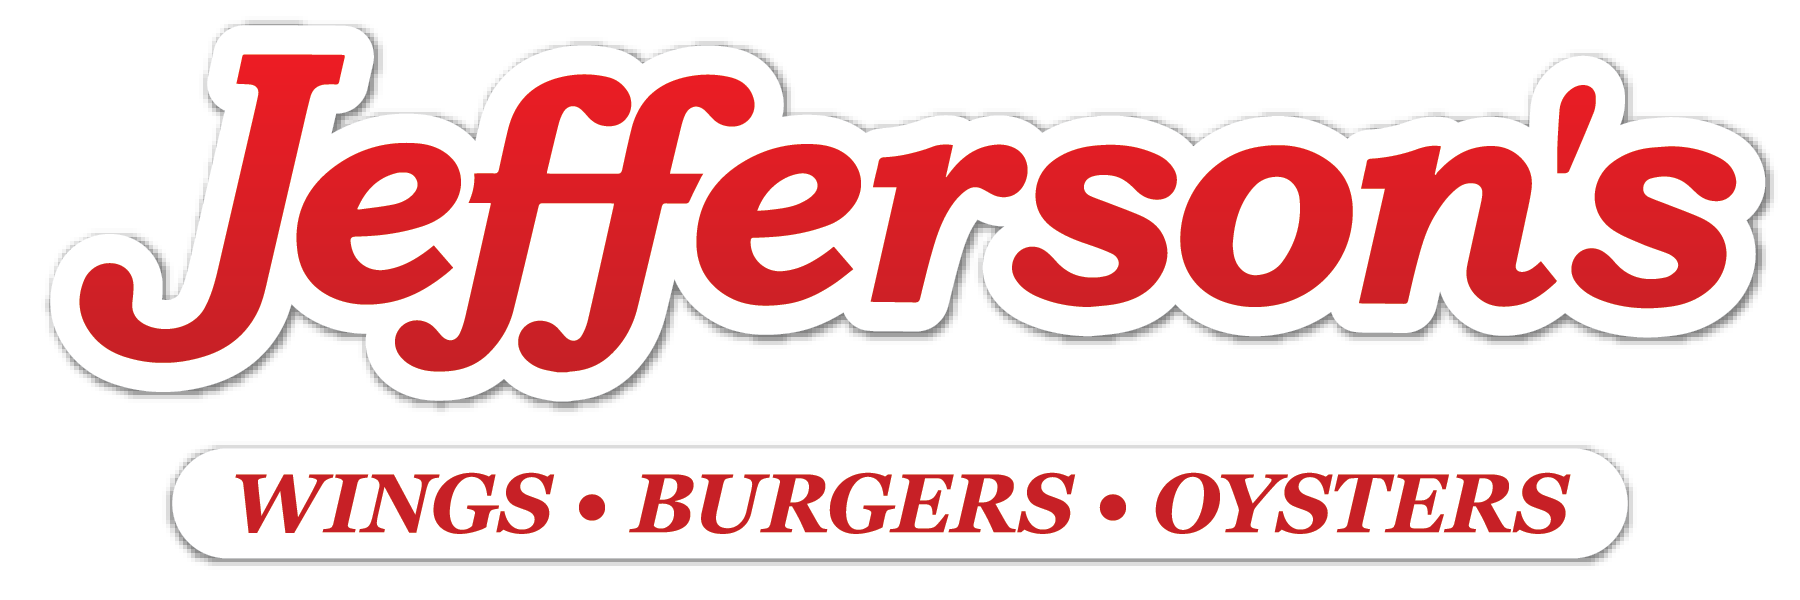 Jeffersons-Logo-3-1.png